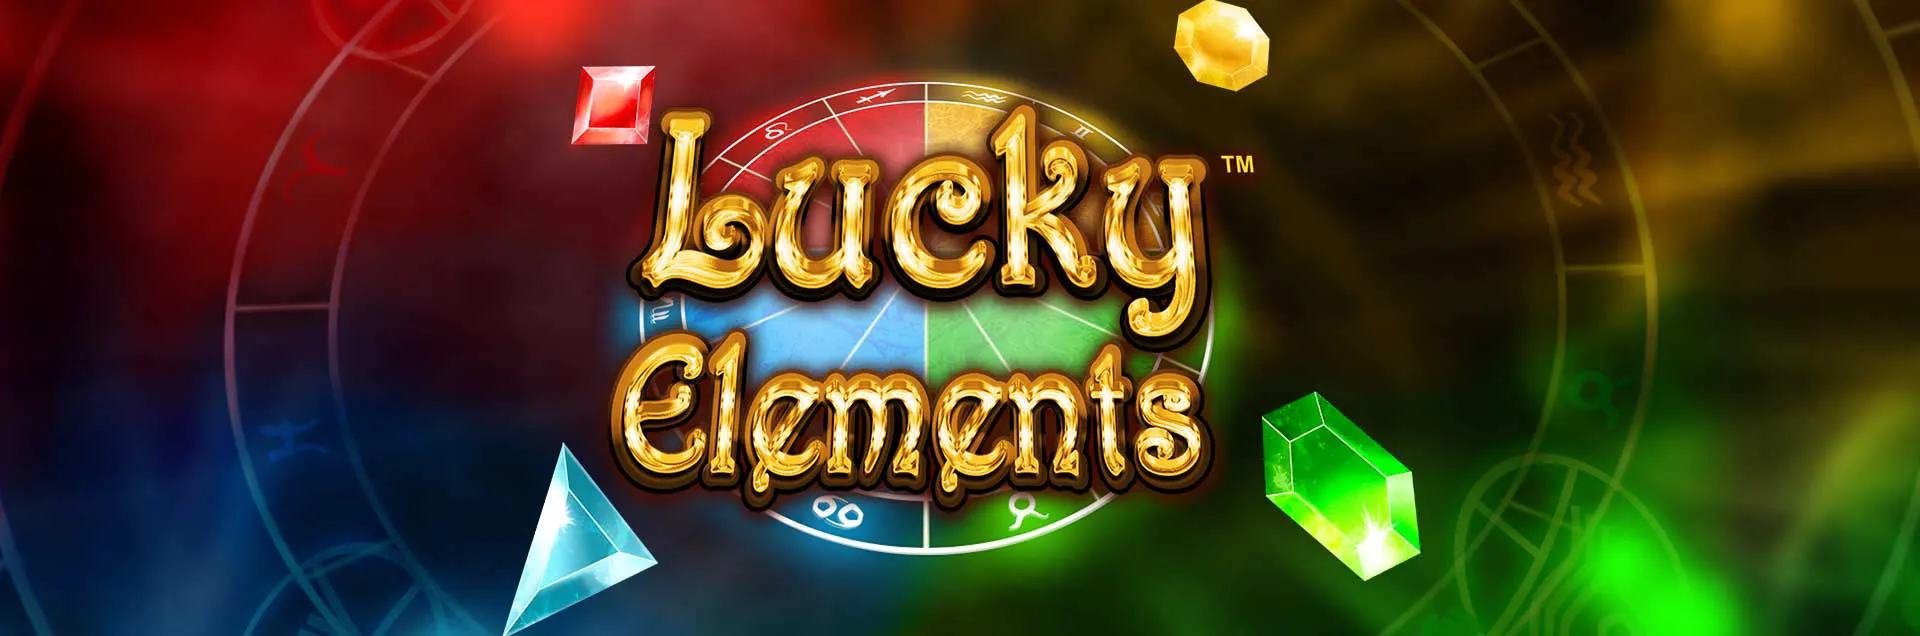 lucky elements